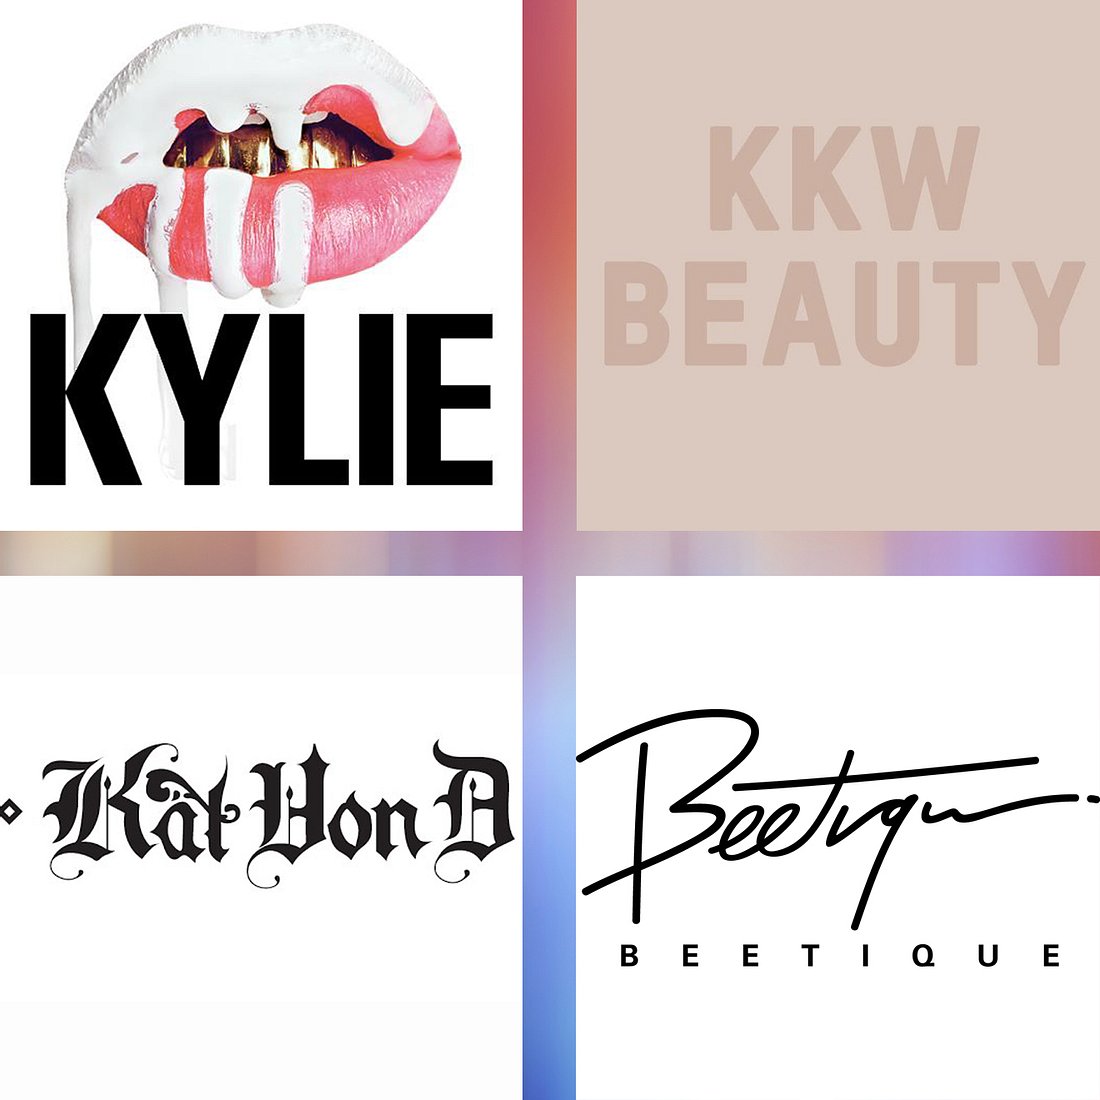 Kylie Cosmetics, KKW Beauty, Kat Von D Beauty und Beetique